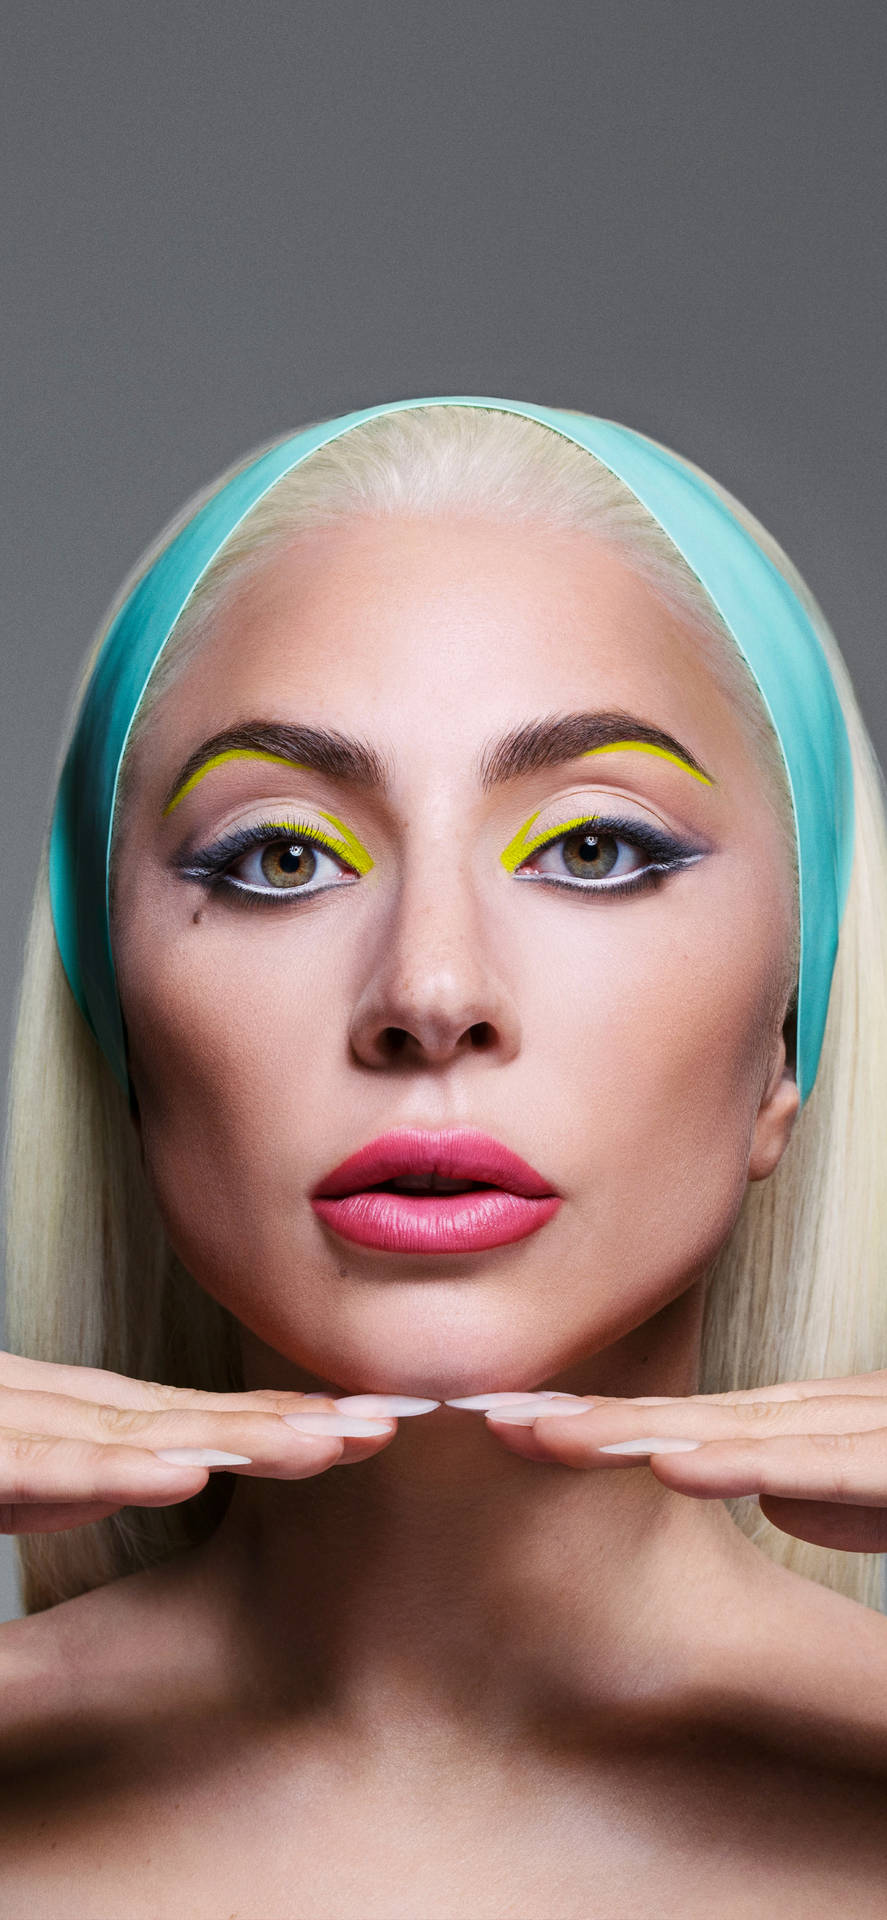 Lady Gaga Singer Celebrity Portrait Background